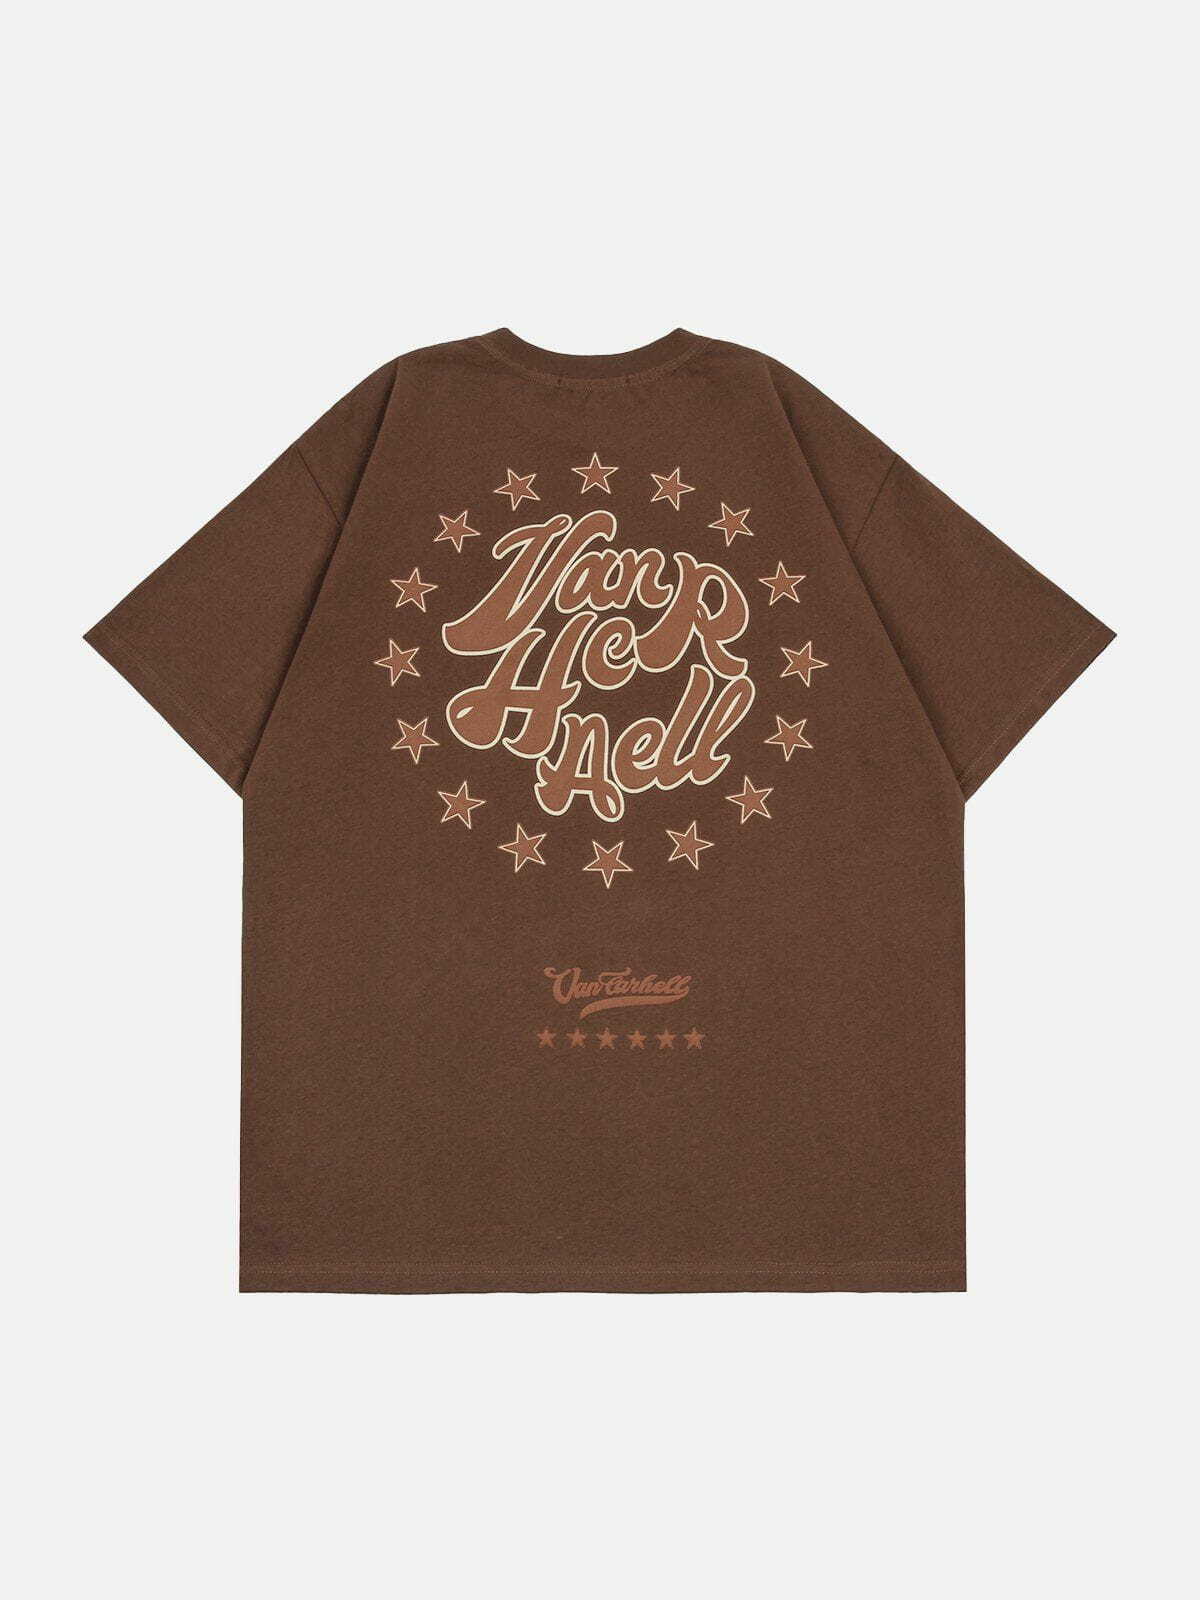 playful star print tee edgy  retro shirt for youthful streetwear 3354